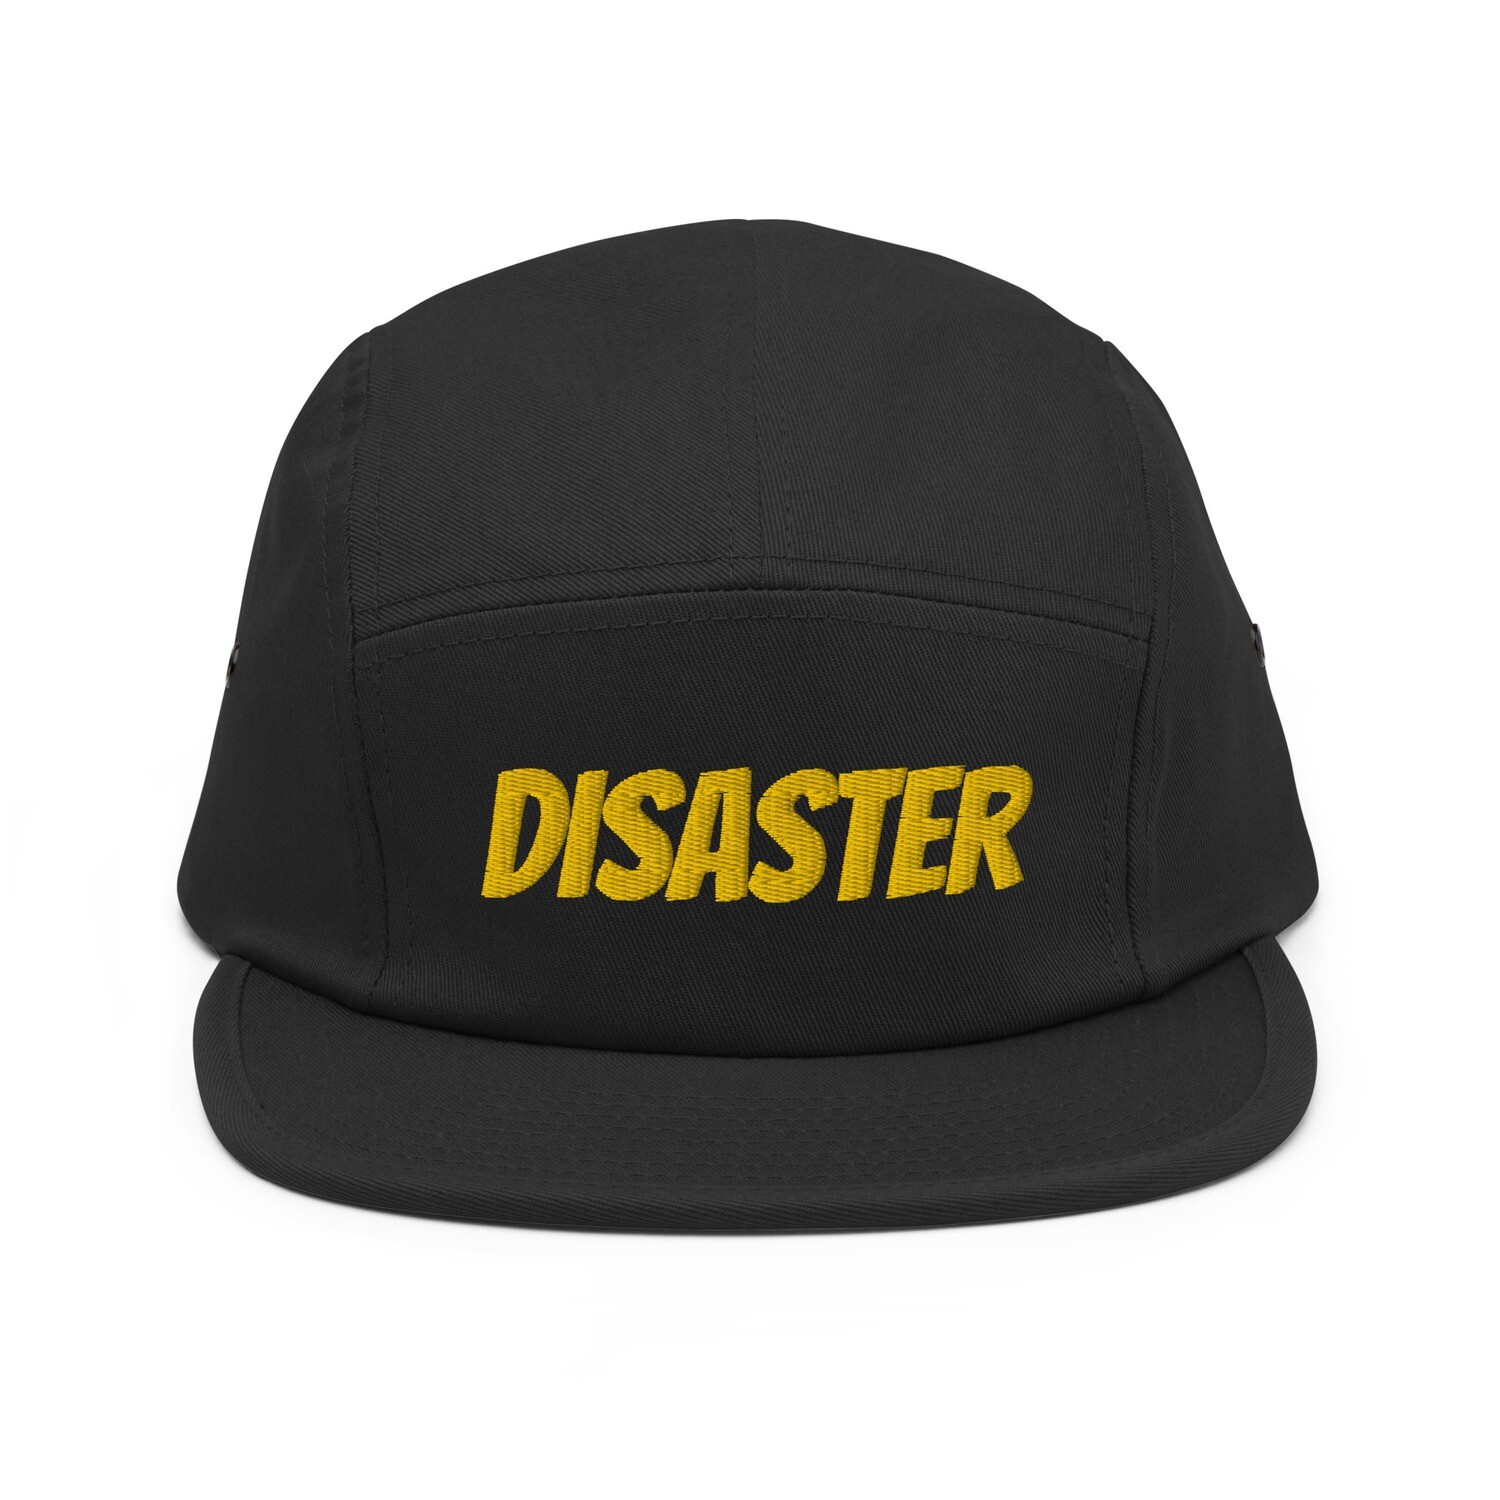 DISASTER - Five Panel Cap